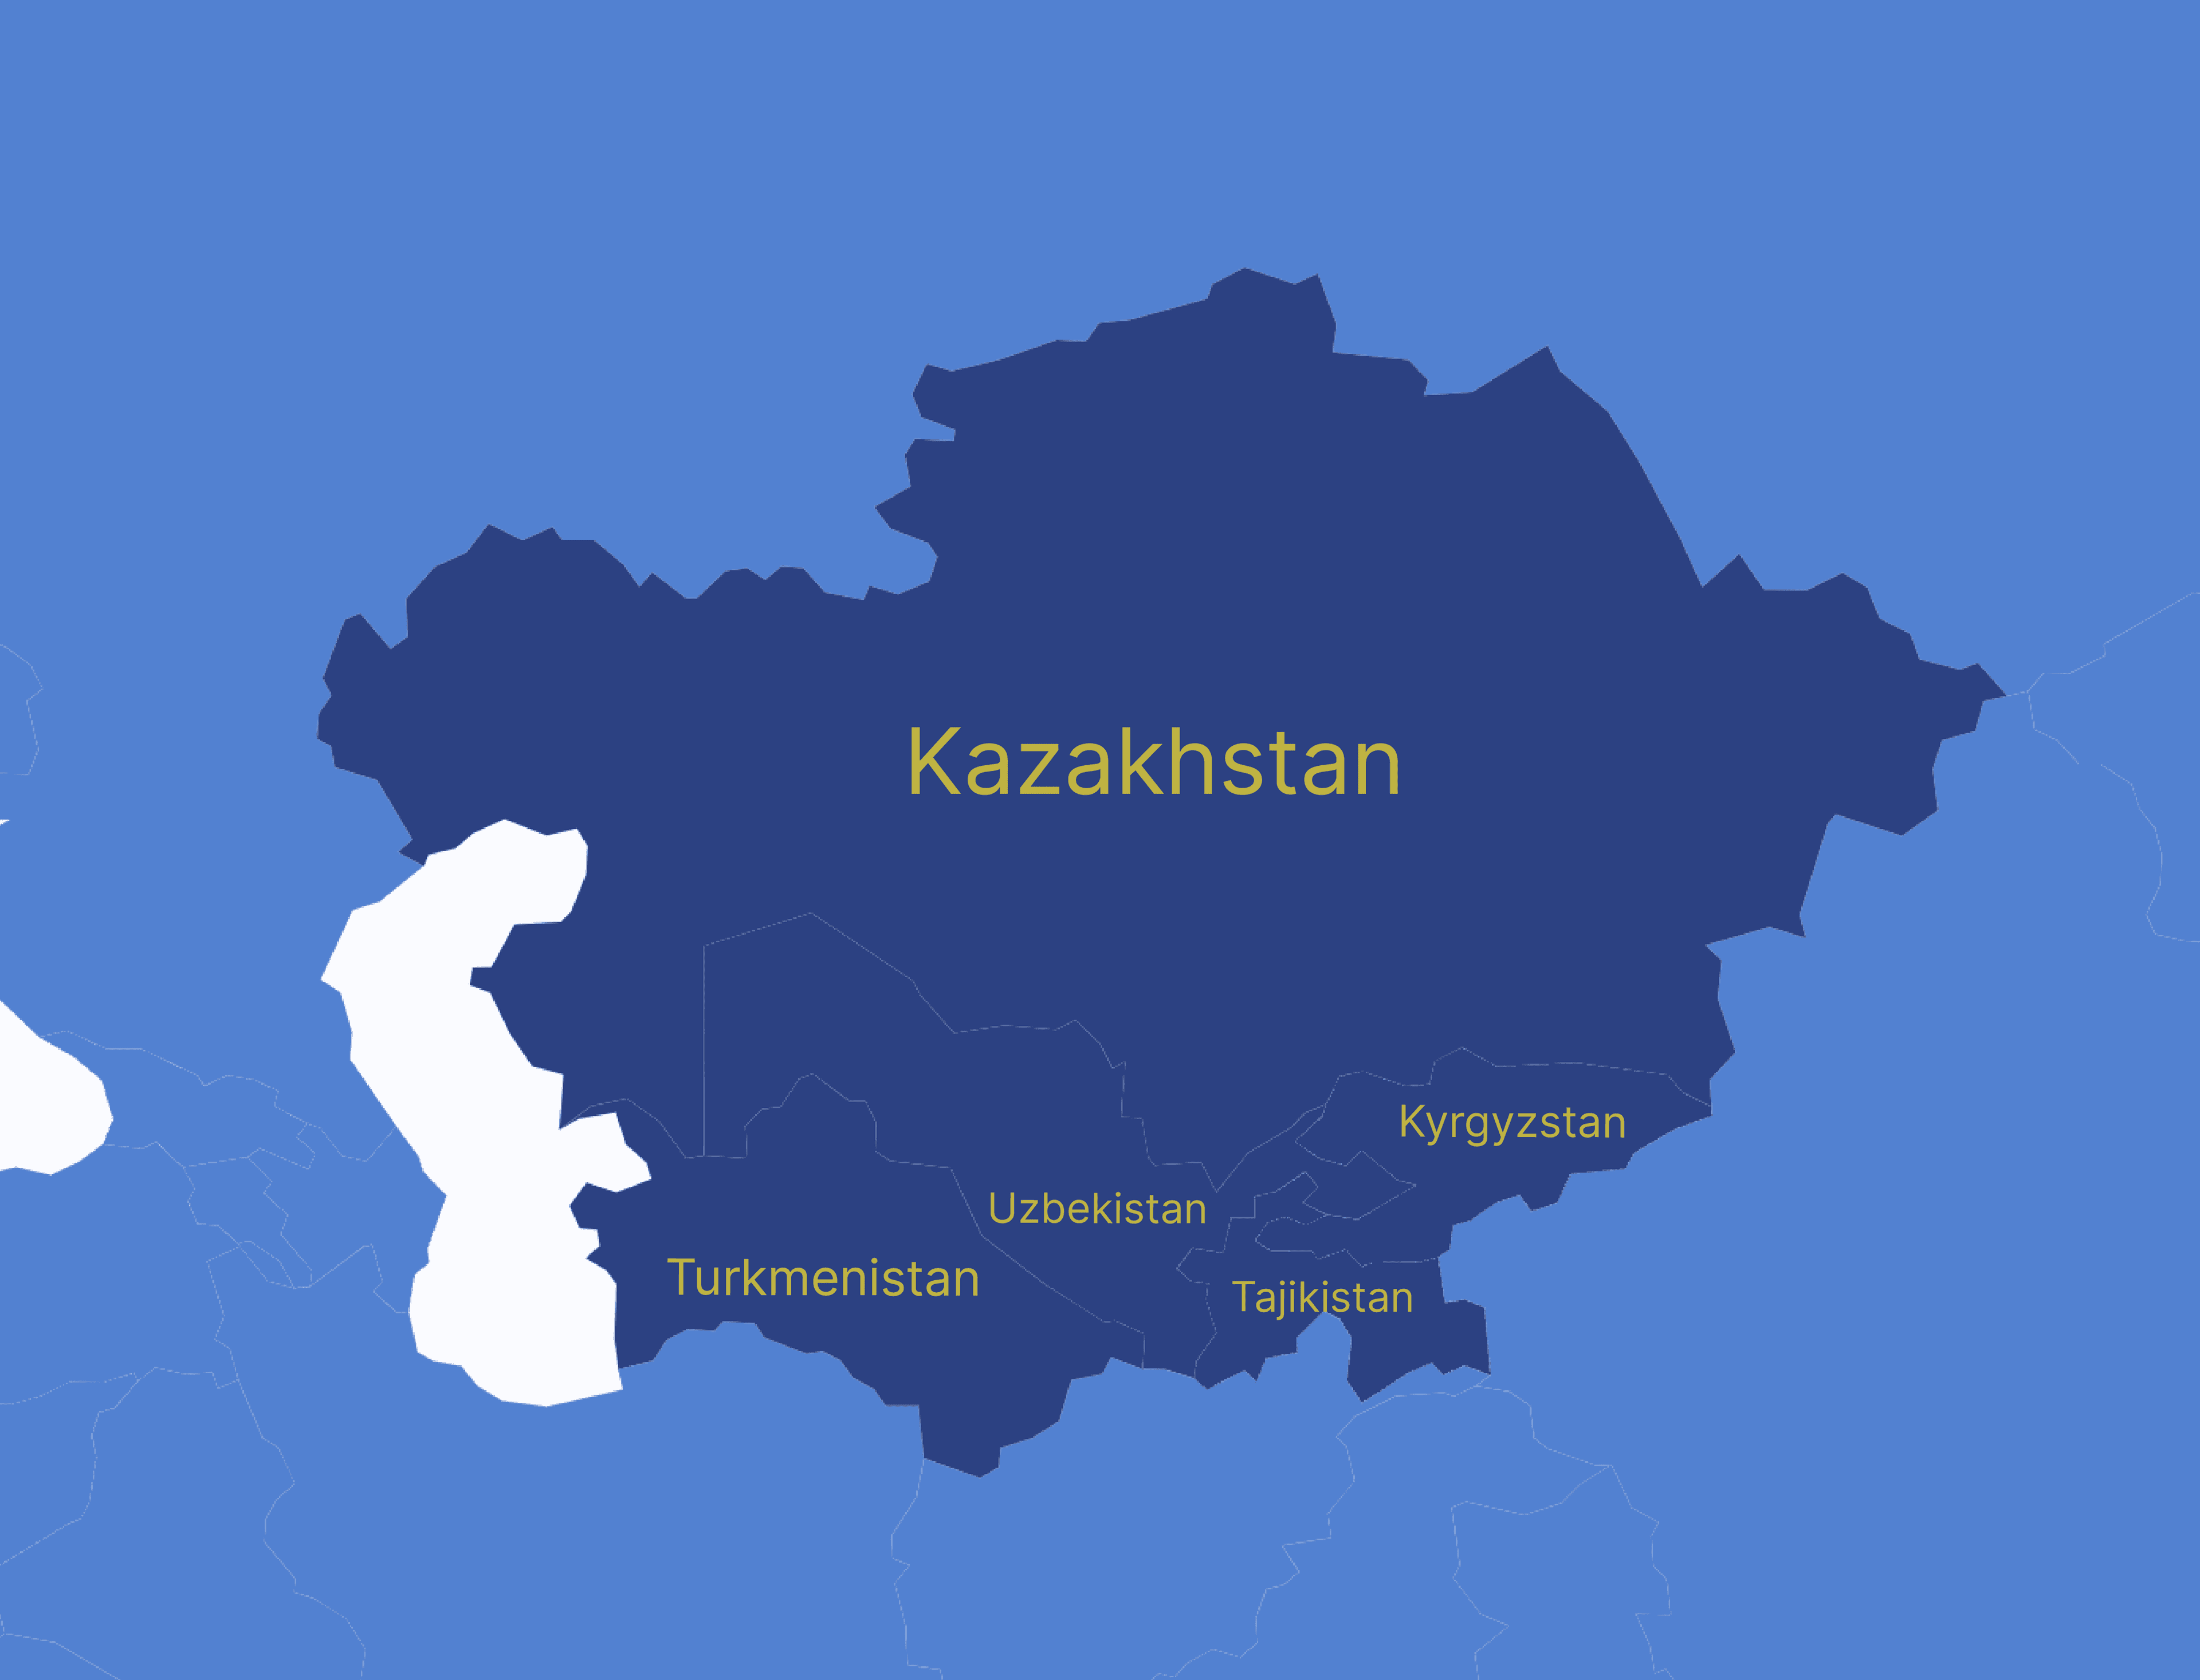 Central Asia in Focus